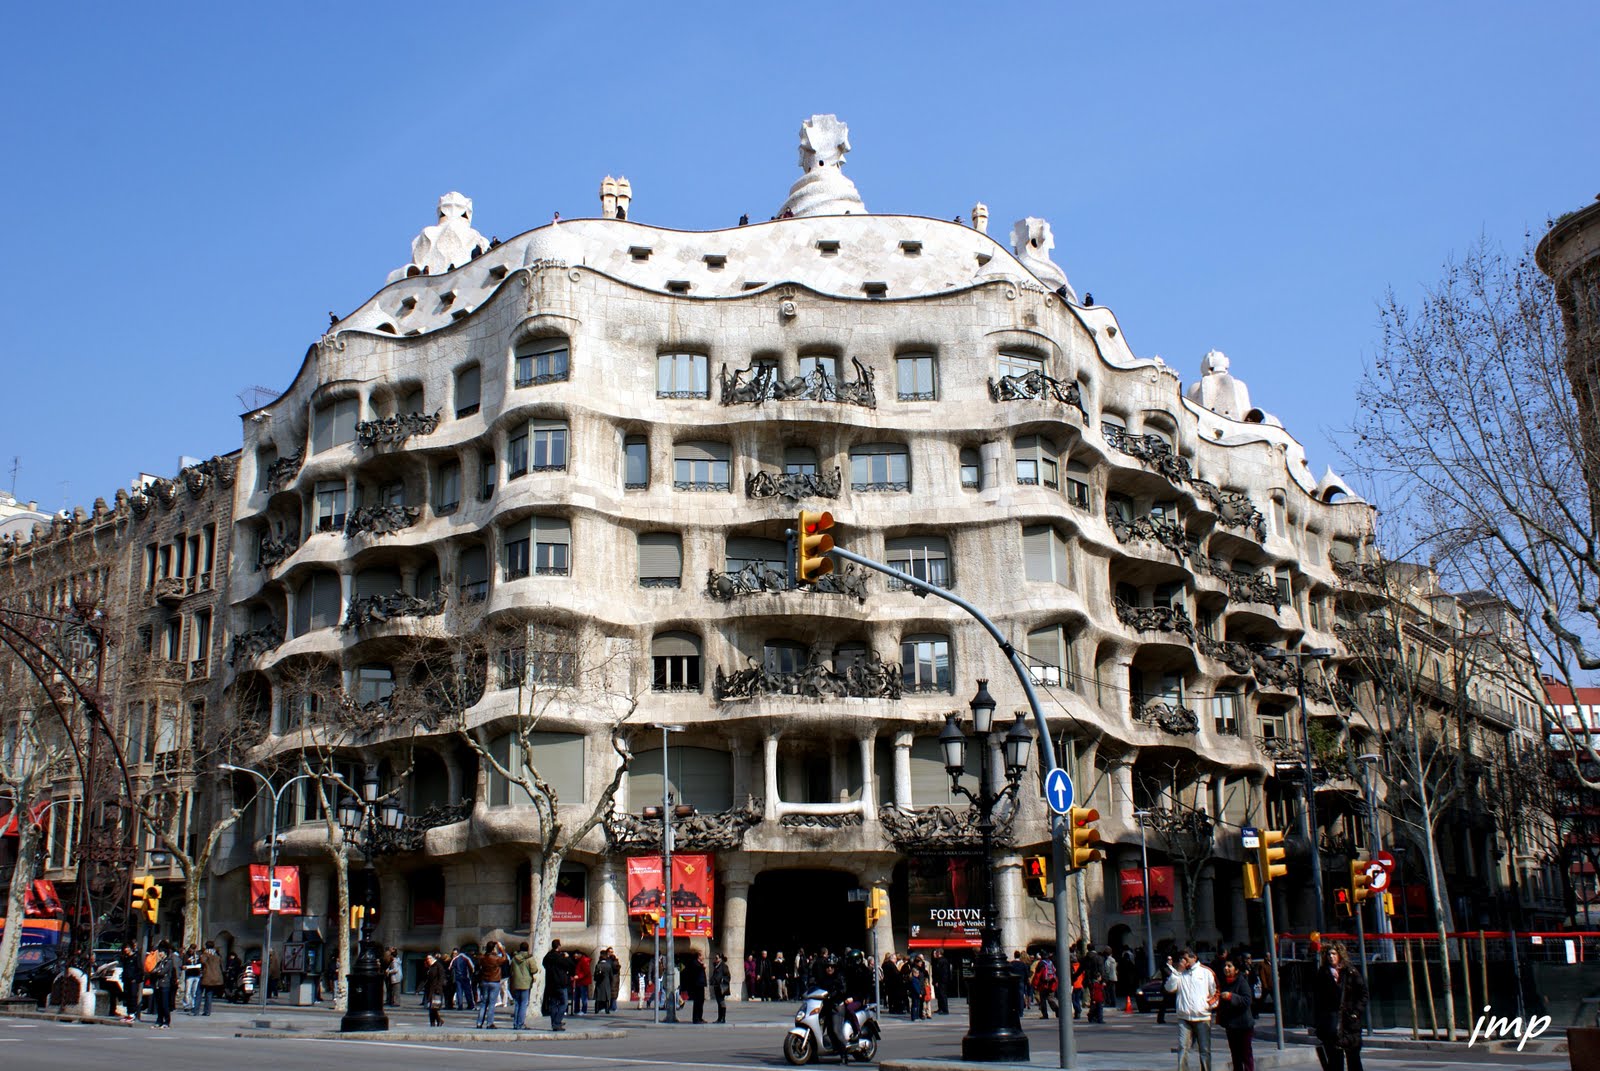 The Barcelona of Gaudí - Castillo de Somaén